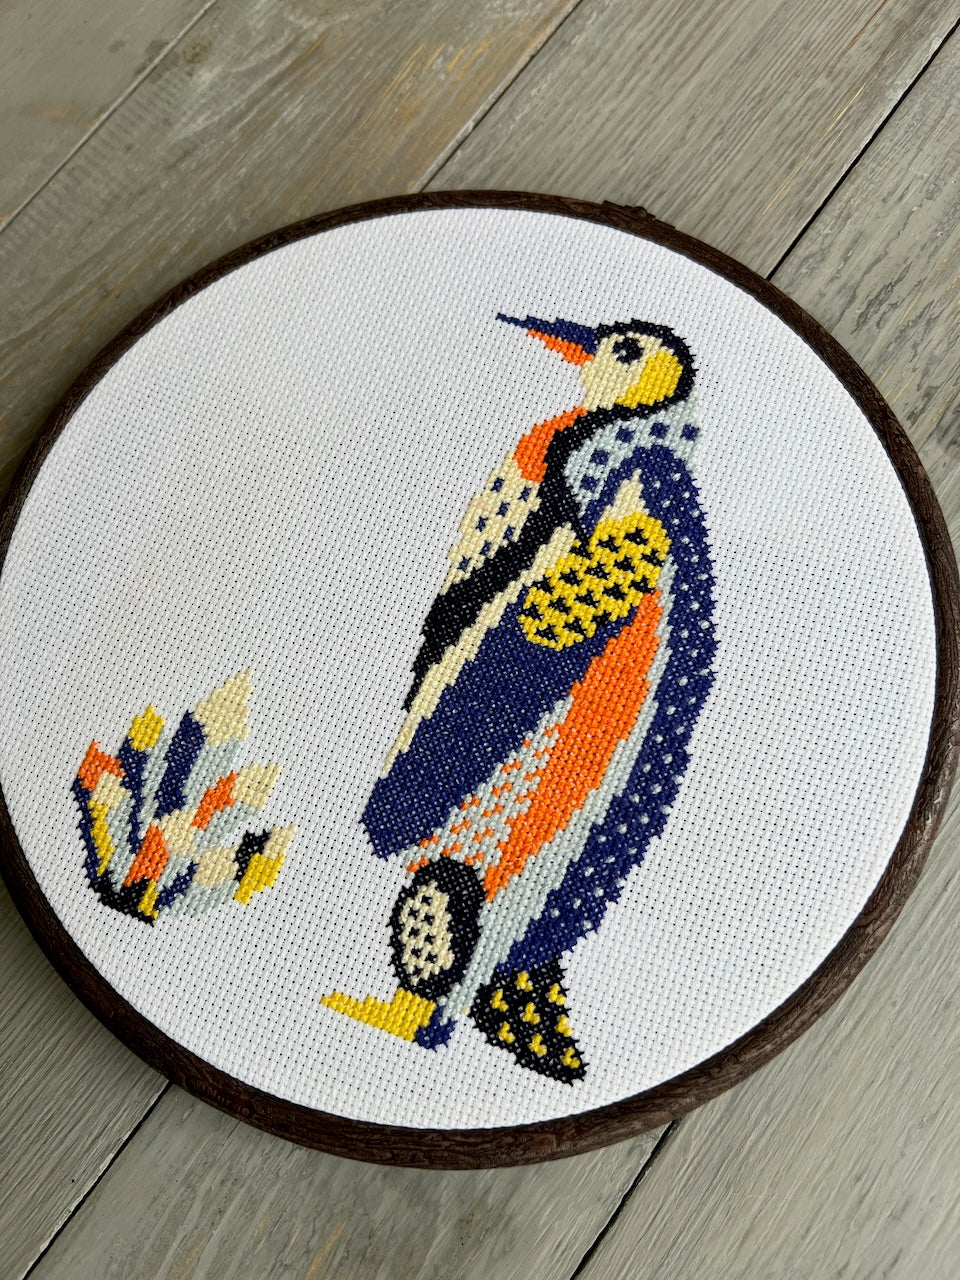 Penguin - cross stitch pattern